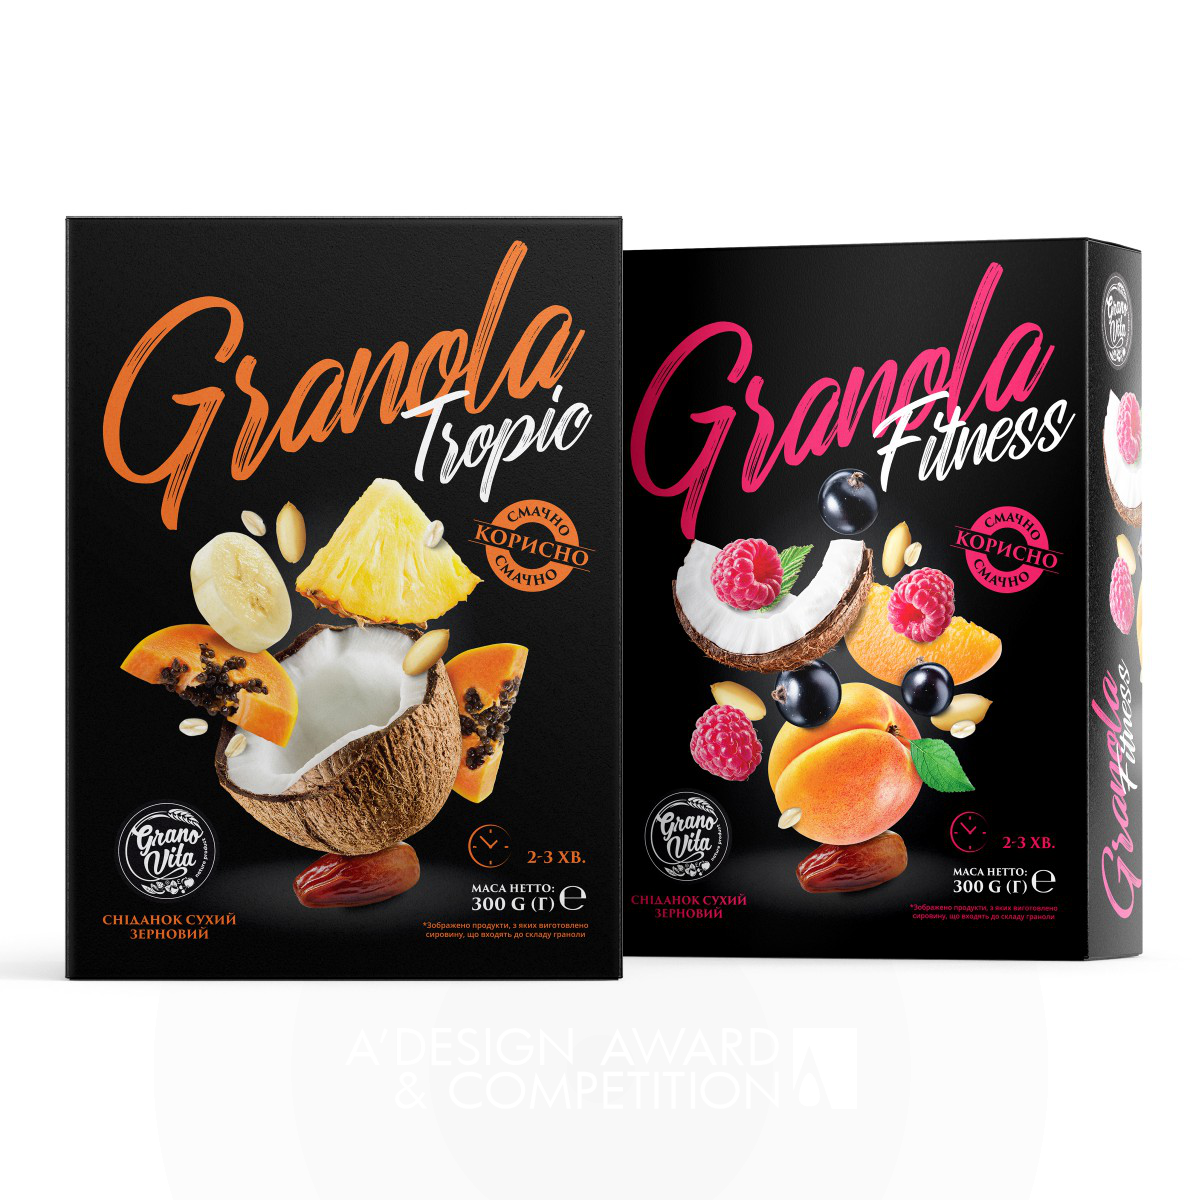 Granovita <b>Granola Packaging